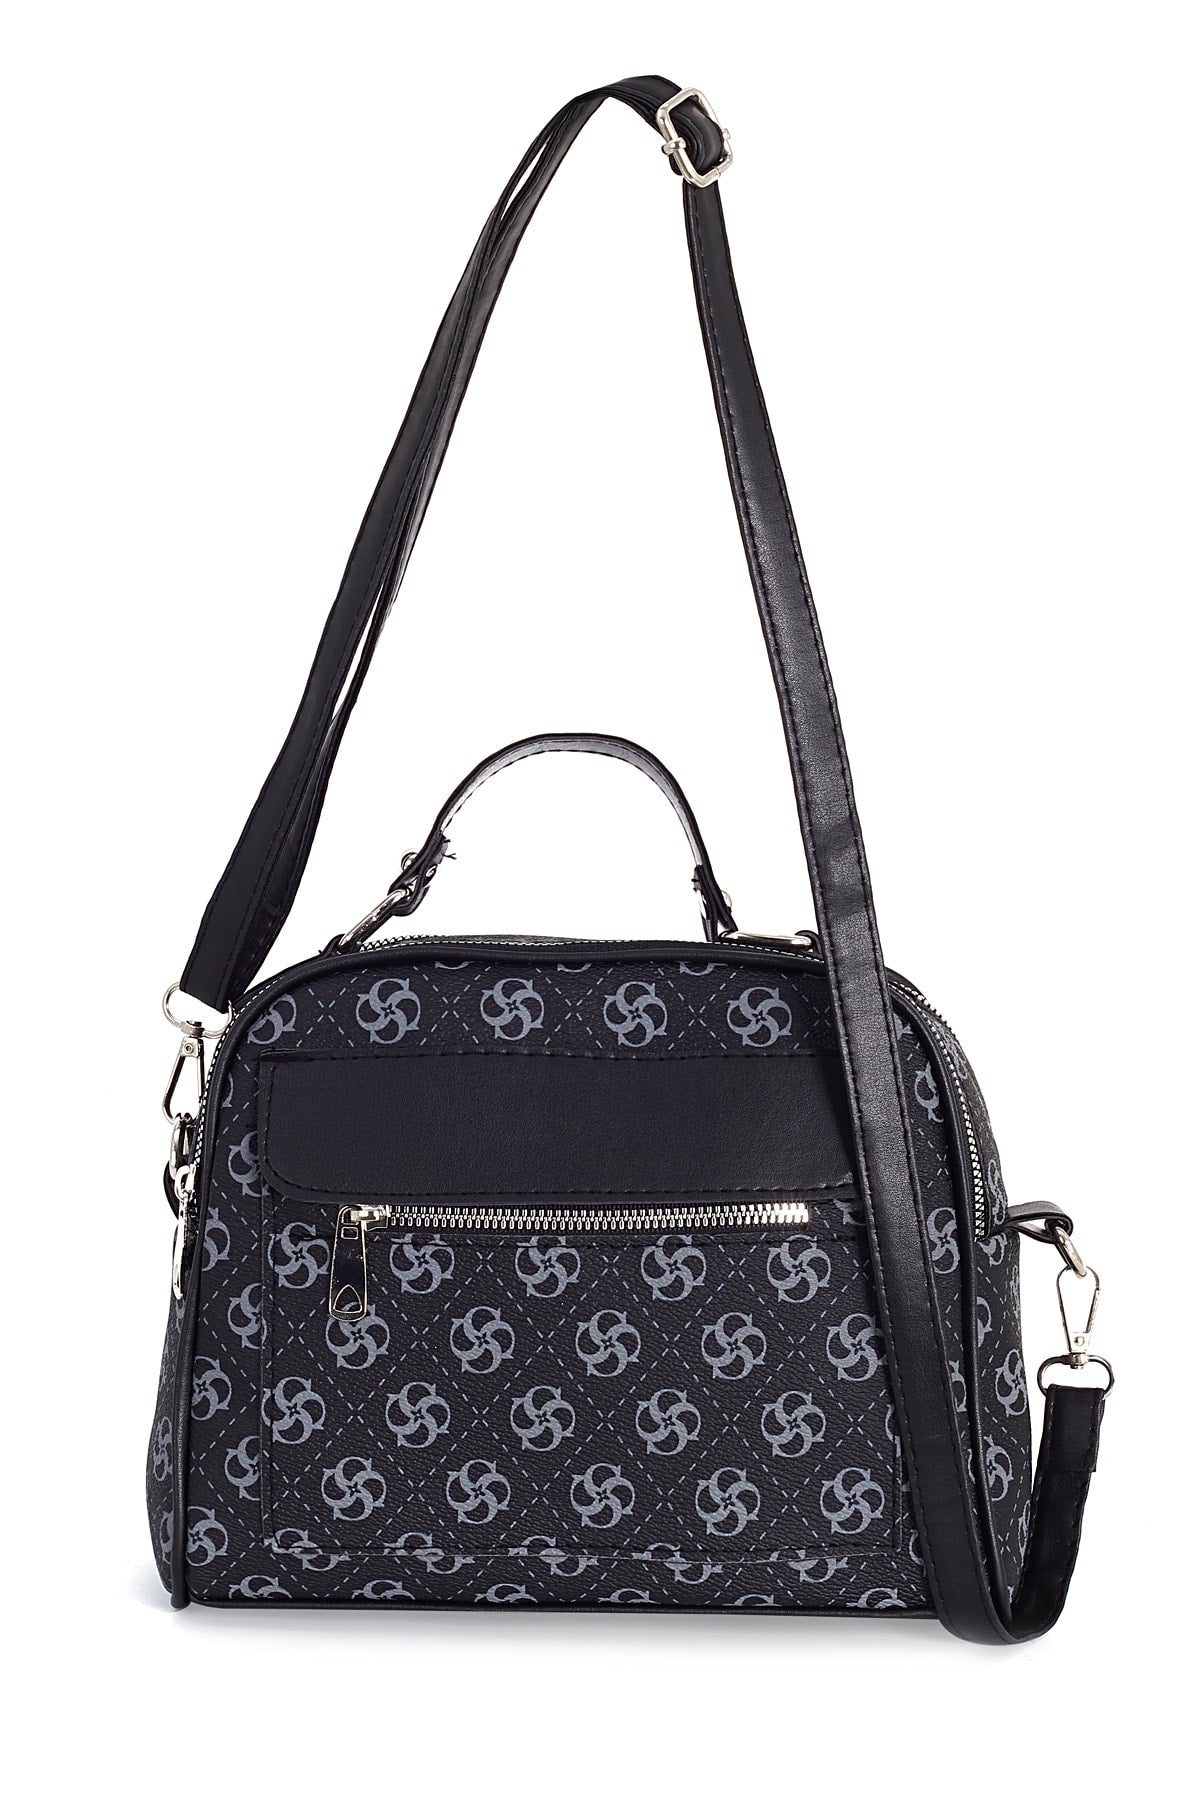 Women's Black Patterned Multi-Compartment Shoulder Bag Crossbody And Clutch Bag